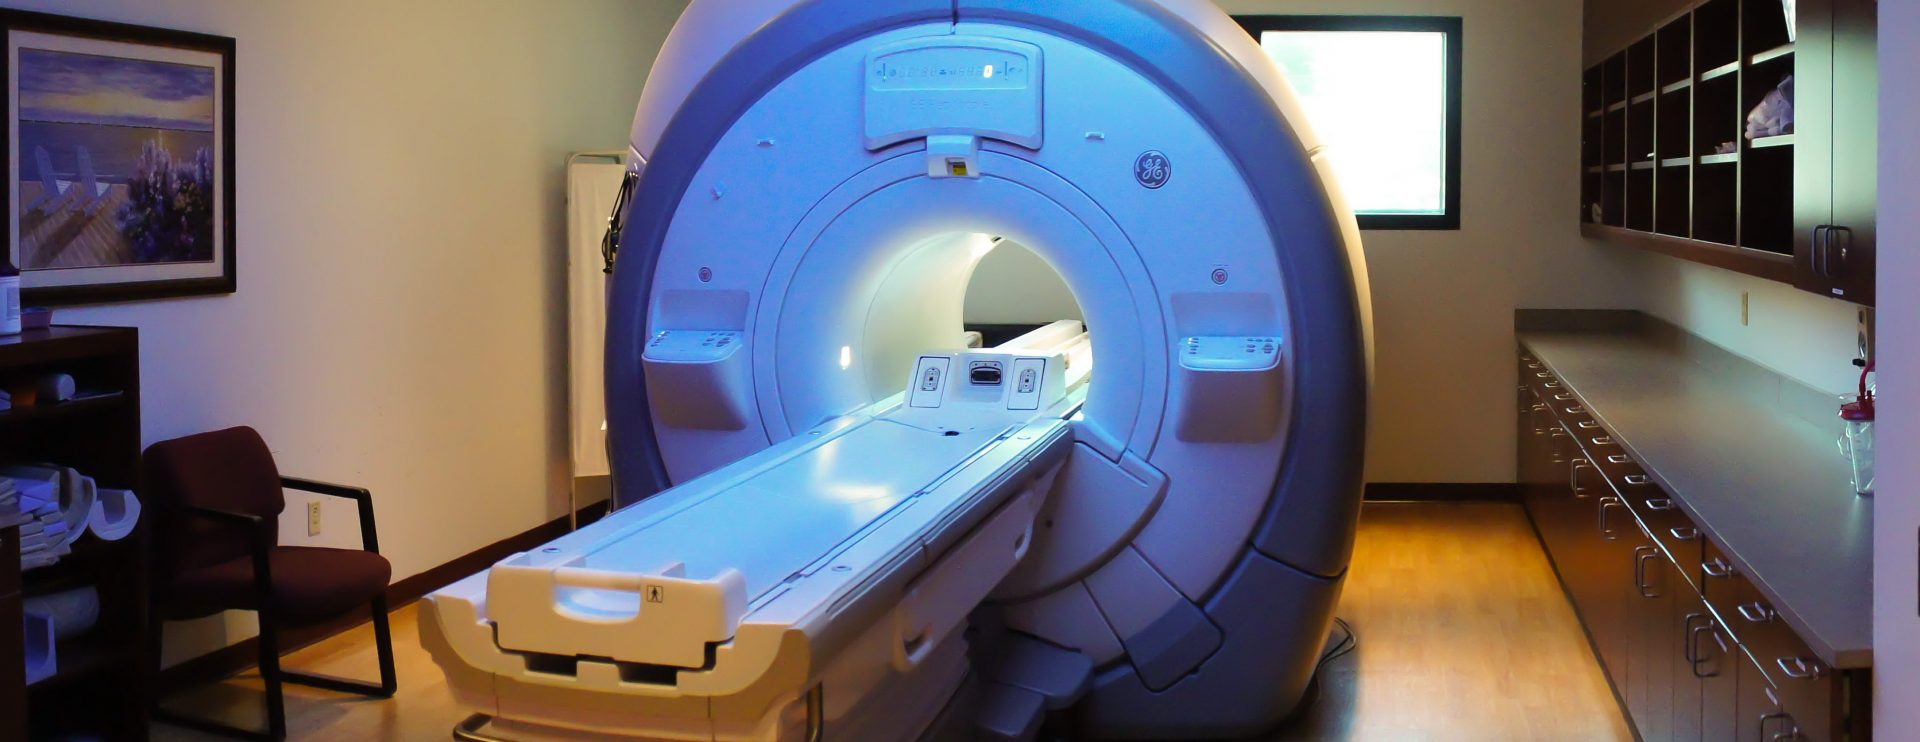 MRI Abdominal Hepatitis C Case Study 